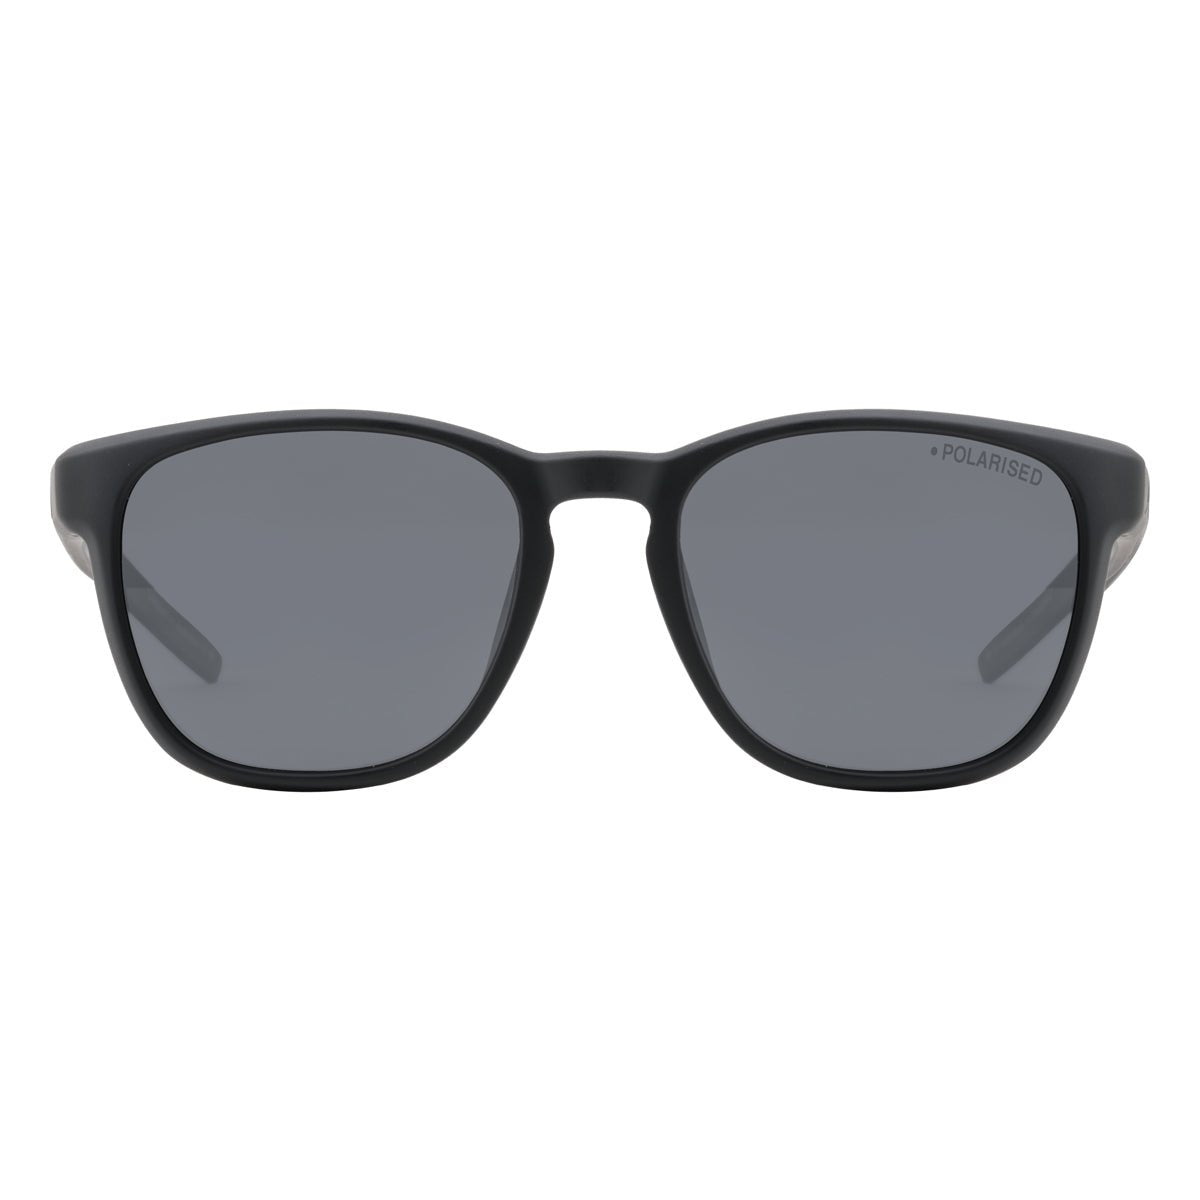 Dirty Dog Lit Sunglasses - Worthing Watersports - 53756 - Sunglasses - Dirty Dog